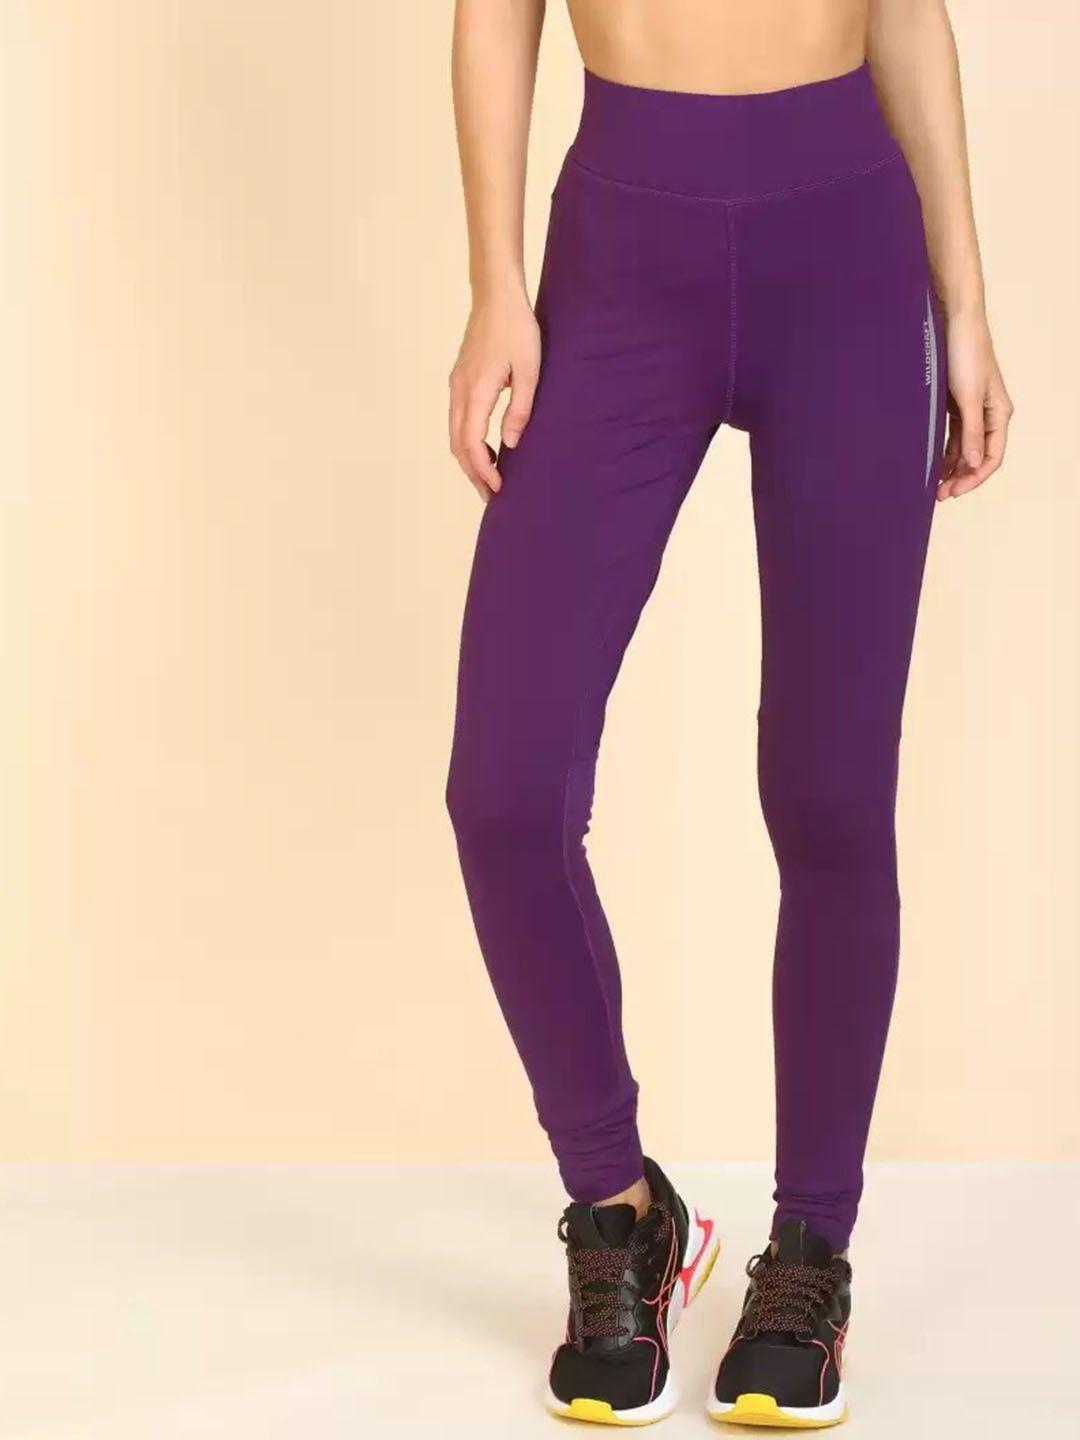 wildcraft women purple solid sports tights